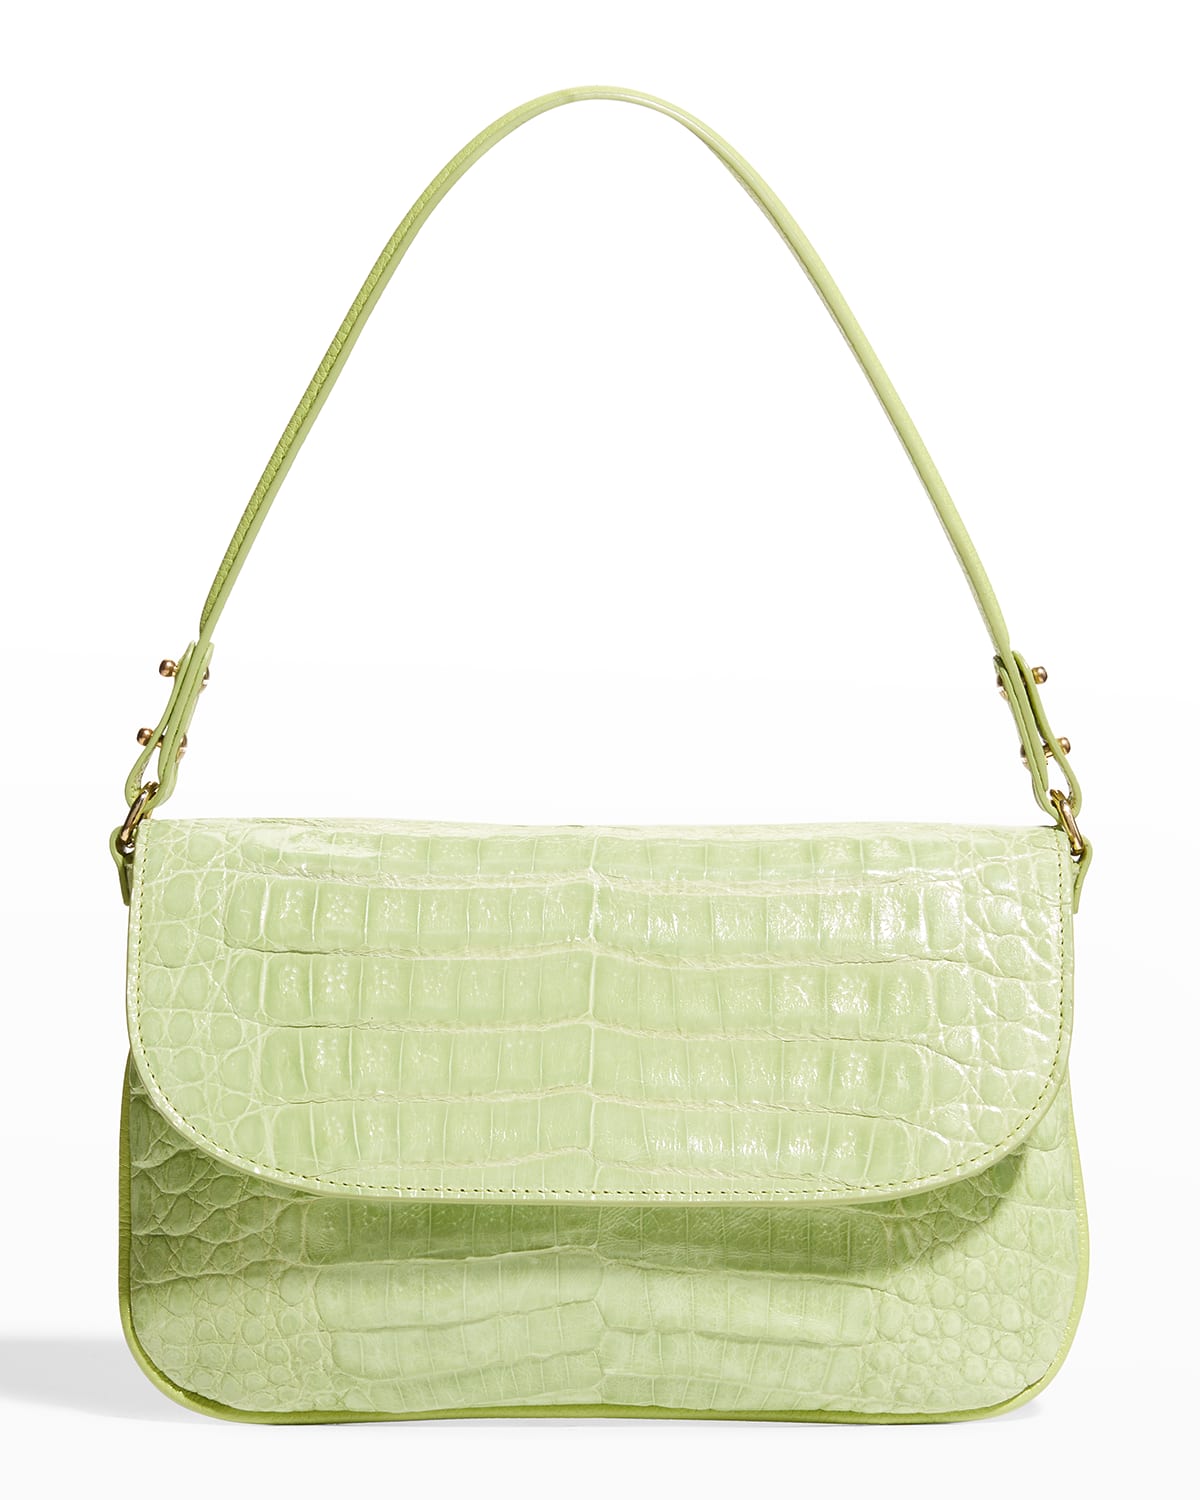 Maria Oliver Gracia Crocodile Clutch Bag | Neiman Marcus